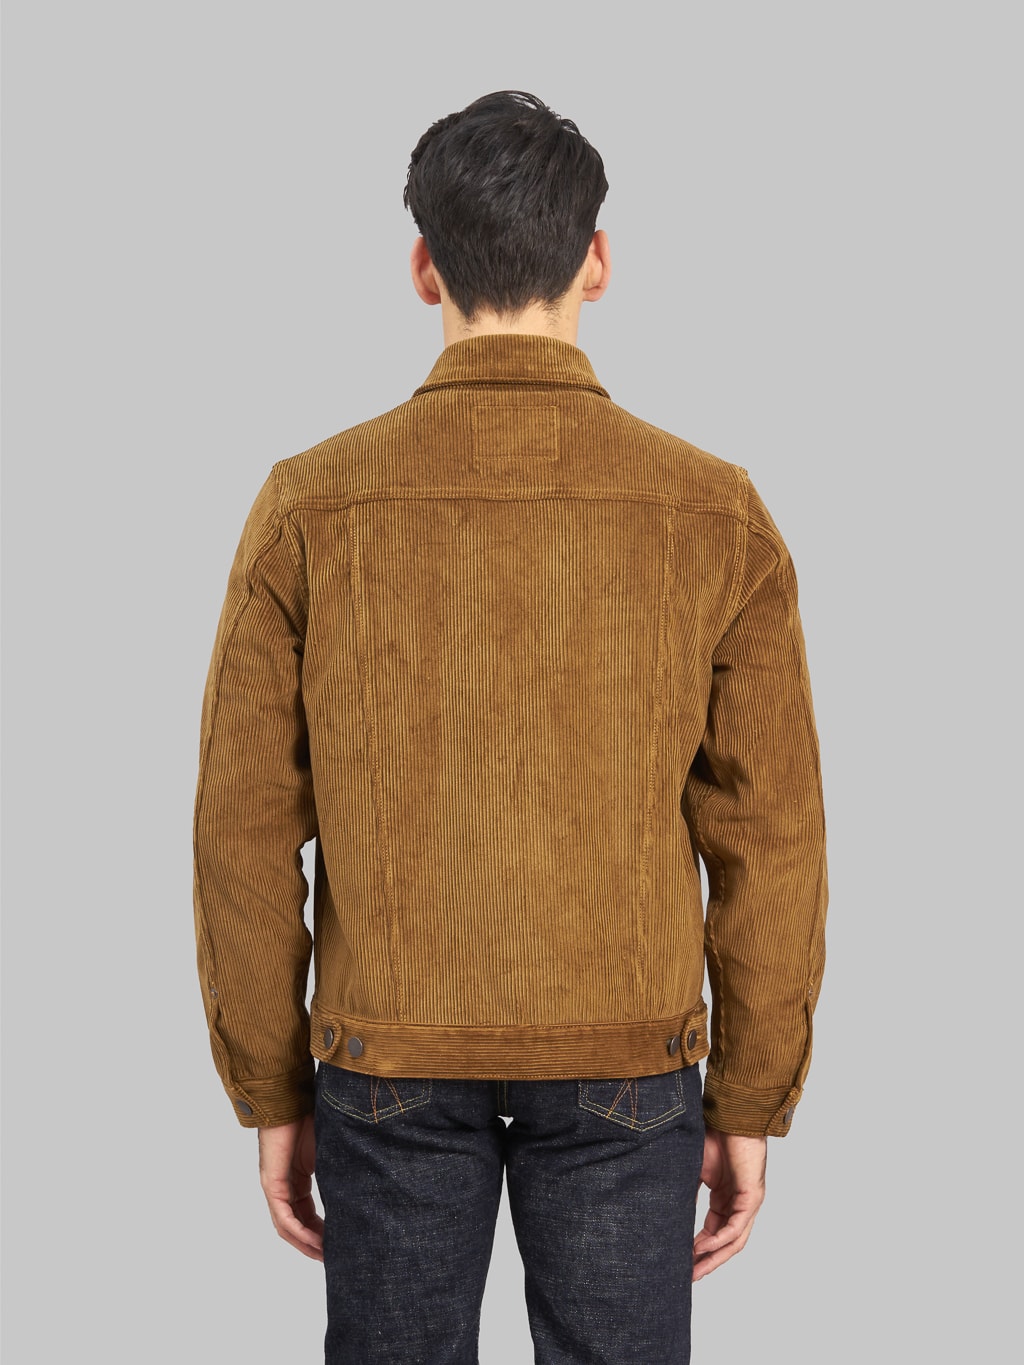 Freenote Cloth Classic Jacket Gold Corduroy  model back fit